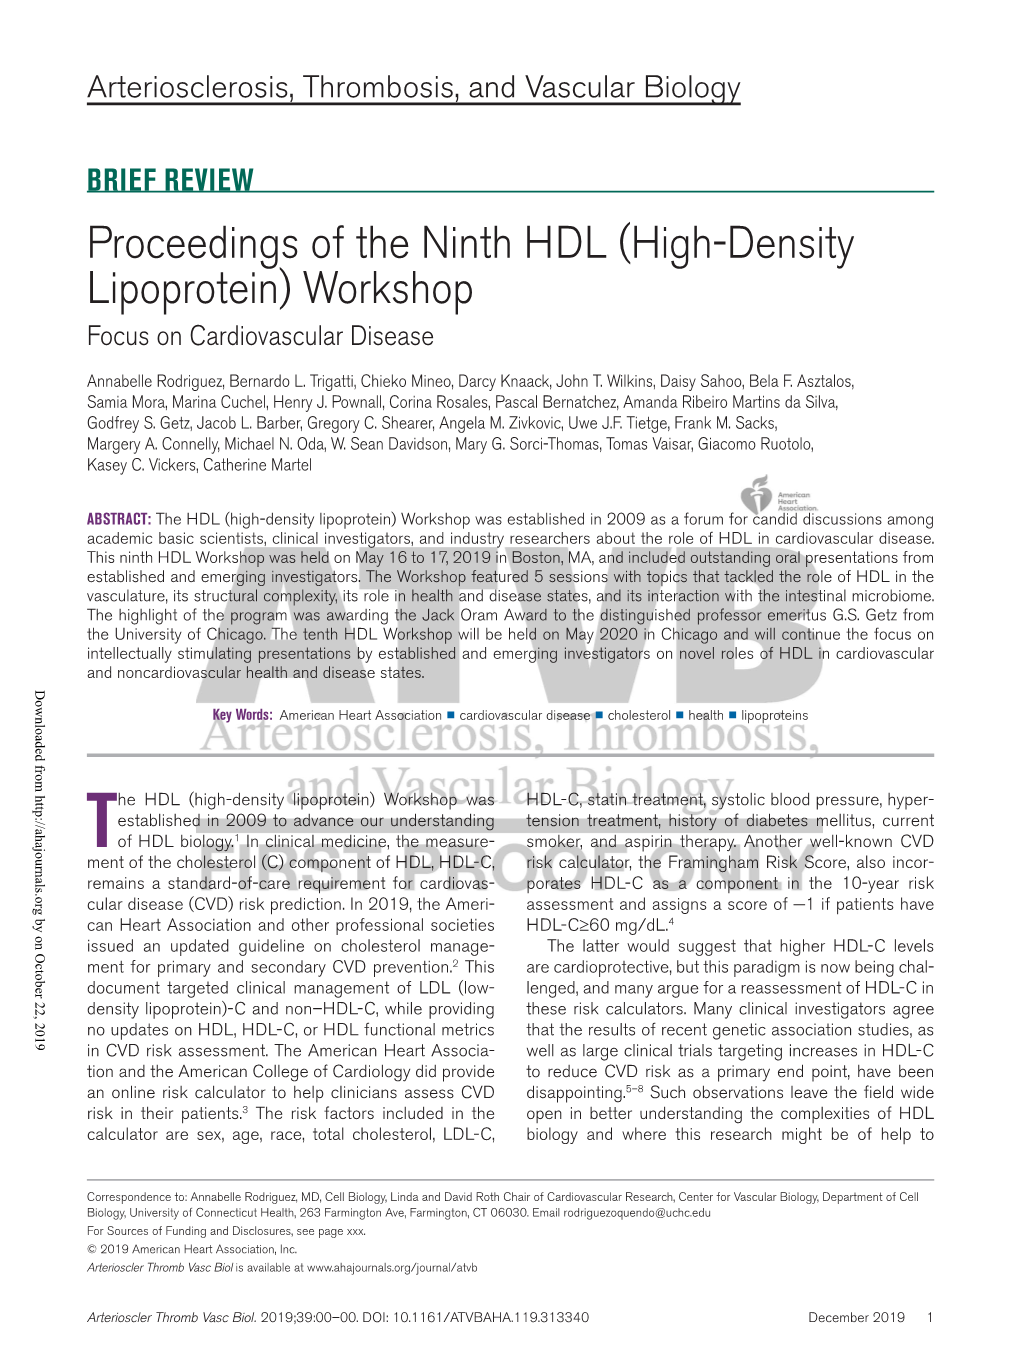 Proceedings of the Ninth HDL (High-Density Lipoprotein) Workshop Focus on Cardiovascular Disease